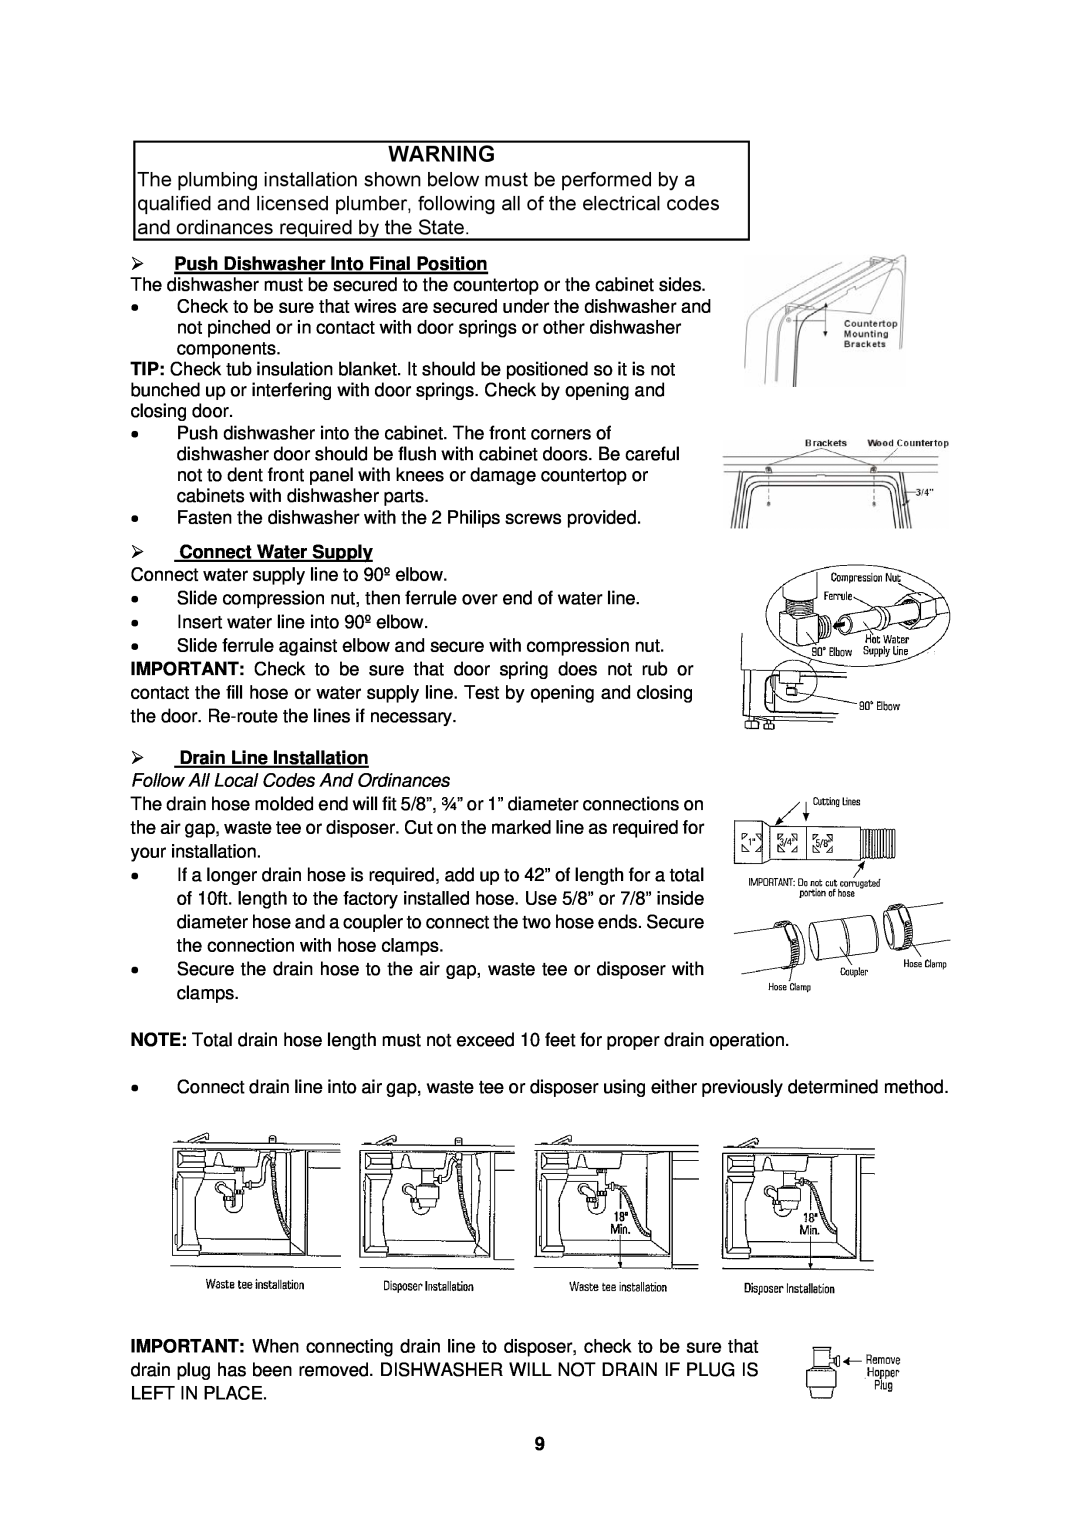 Avanti DW184B, DW183W, DW182ESS instruction manual ¾Push Dishwasher Into Final Position, ¾Drain Line Installation 